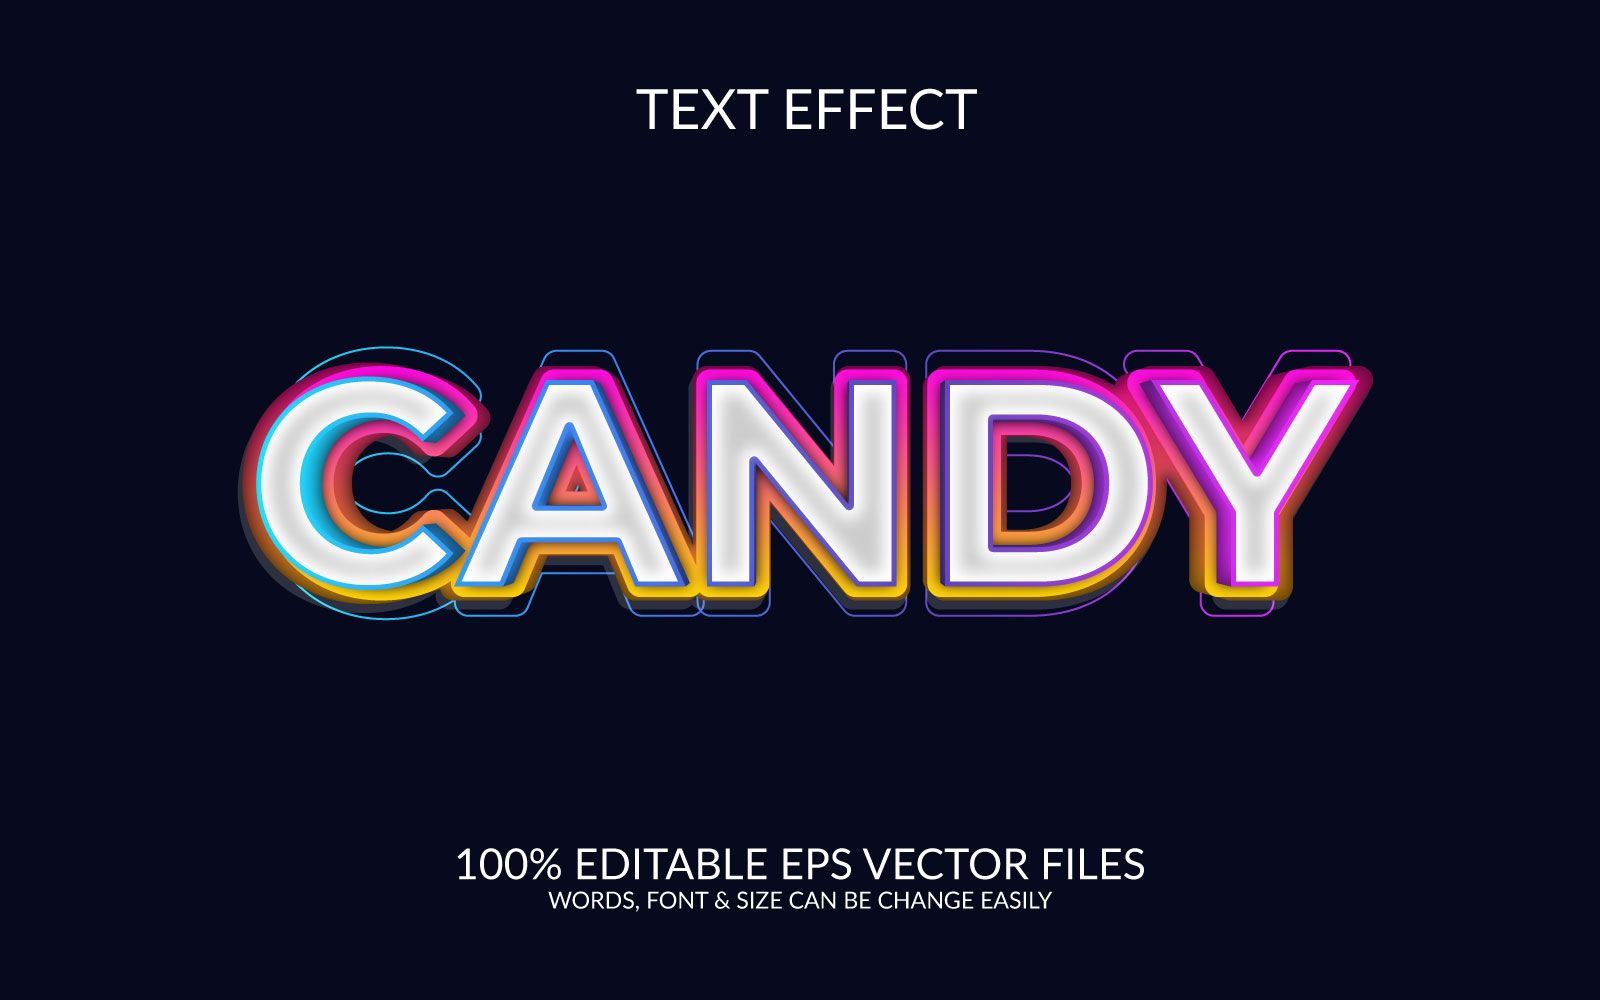 Candy 3D Vector Fully Editable Eps Text Effect